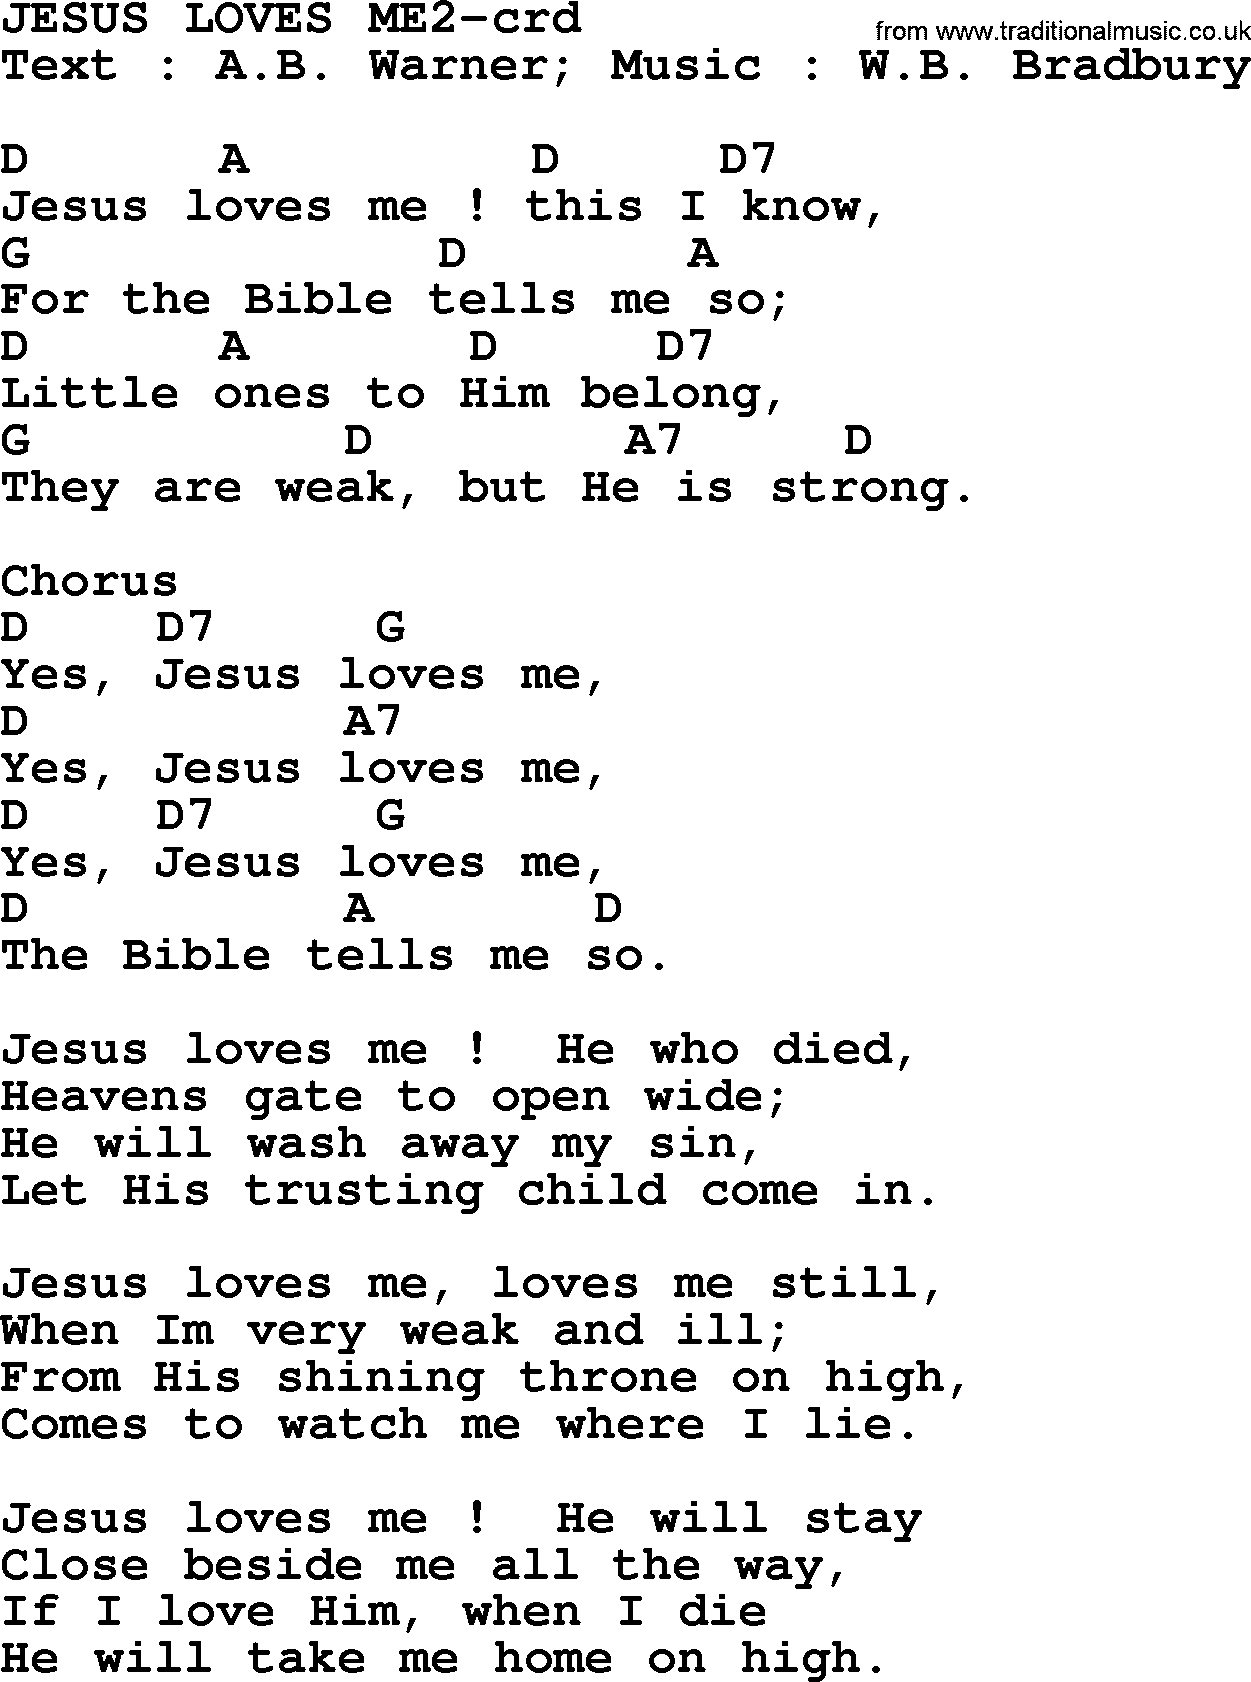 Top 500 Hymn: Jesus Loves Me2, lyrics and chords